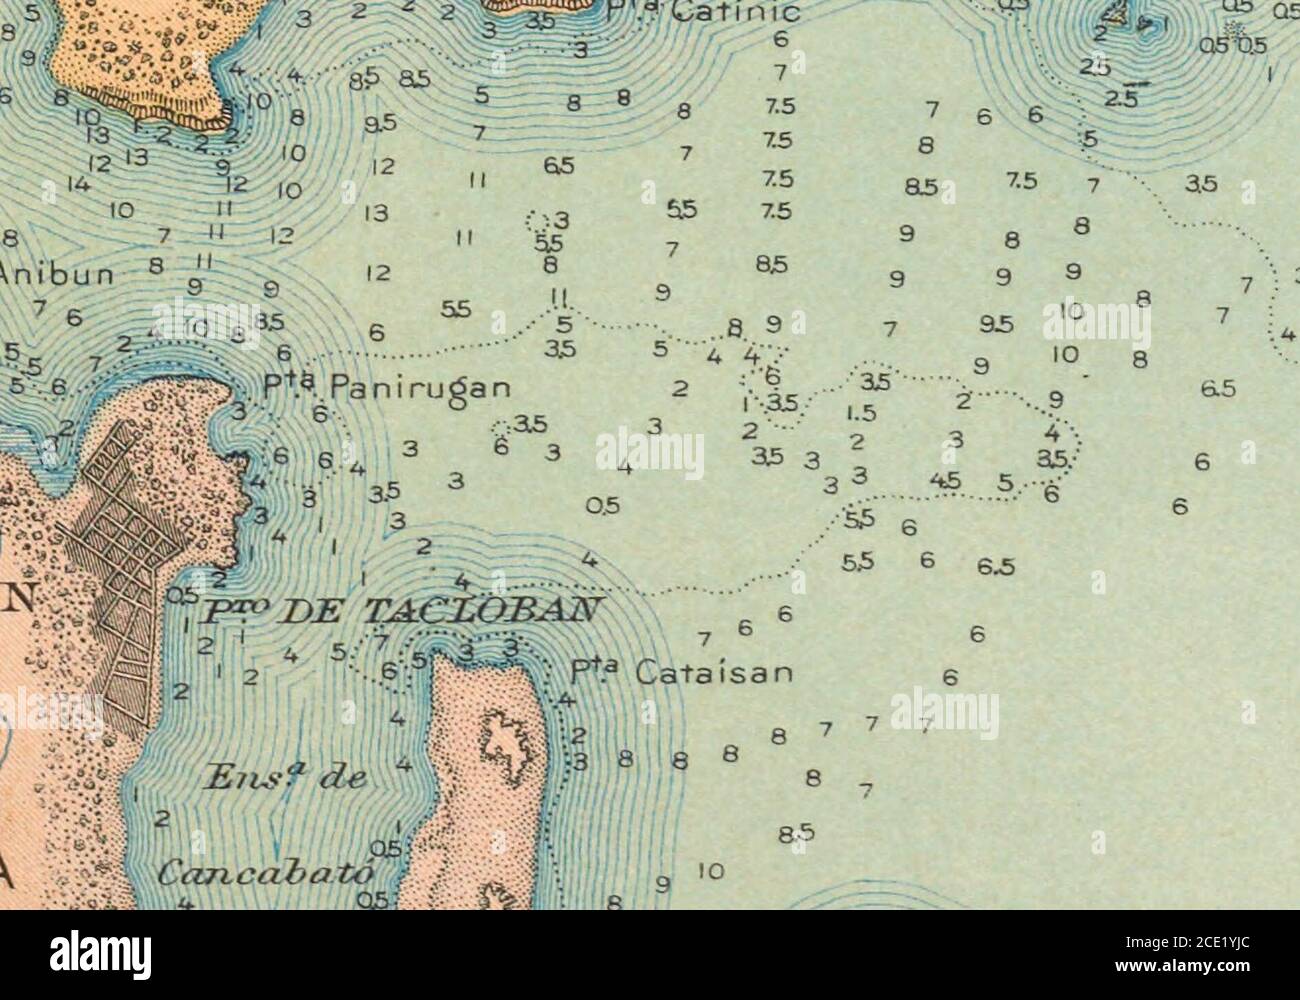 . Atlas of the Philippine Islands . ,-,,,) M.Palanas M.Guindal; M.TIIas3 ya S -AuffiíStirt- oTahoMjig c M.Calarabayan lamina M.Lunas p) • ,/, p M.Tabaang I-- o,.. t  M.BanutoM.Bató M.Pongon BUo .  TíJñániai-aTiat E.JSixLVaTMcLva: NM9 So yLdffurta. GioTLtcLgb M M.MayanfiaBavbay 1^ M,Hi SejyaJibiinan I , P^= Tagbuc Pta Salacot o O* WcertZj? P^Catarman,S.IsíJj-o (? Pta Bitanjuán A- ? M.Manloy M.MabagonM.Hodlongón M.Cansara man ISLA DE SAMAR K 9o e ,^ .:.^^*:^itei¥«S«^^^^l^ ^ 3-^^ -X fíalos «^ 513 13 13 ir-:-- 9 13 1^ ^l-^Bacalan -^ -6 8 7 11 P^^Anibun 8 7 i 3 3 TACLOB ISLA D E L E Y T E. jBAHI Stock Photo